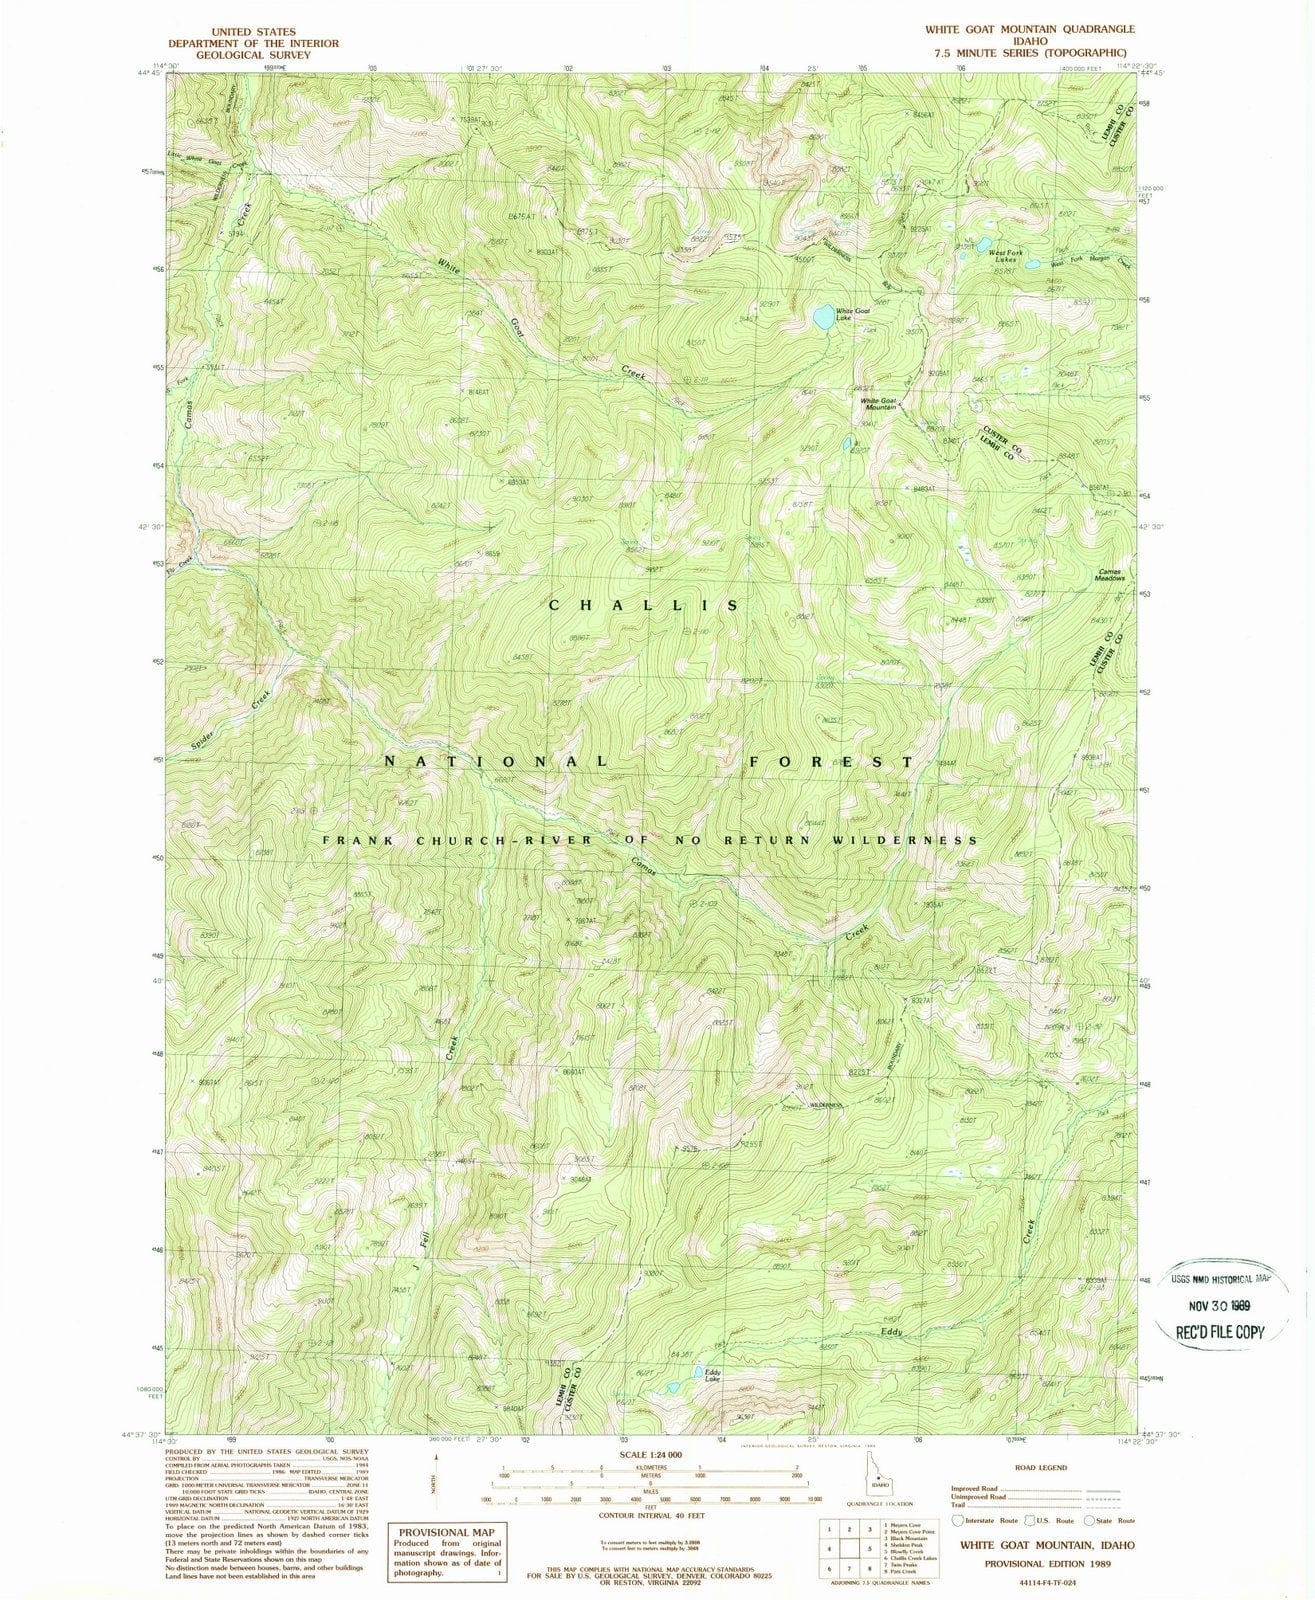 1989 White Goat Mountain, ID - Idaho - USGS Topographic Map